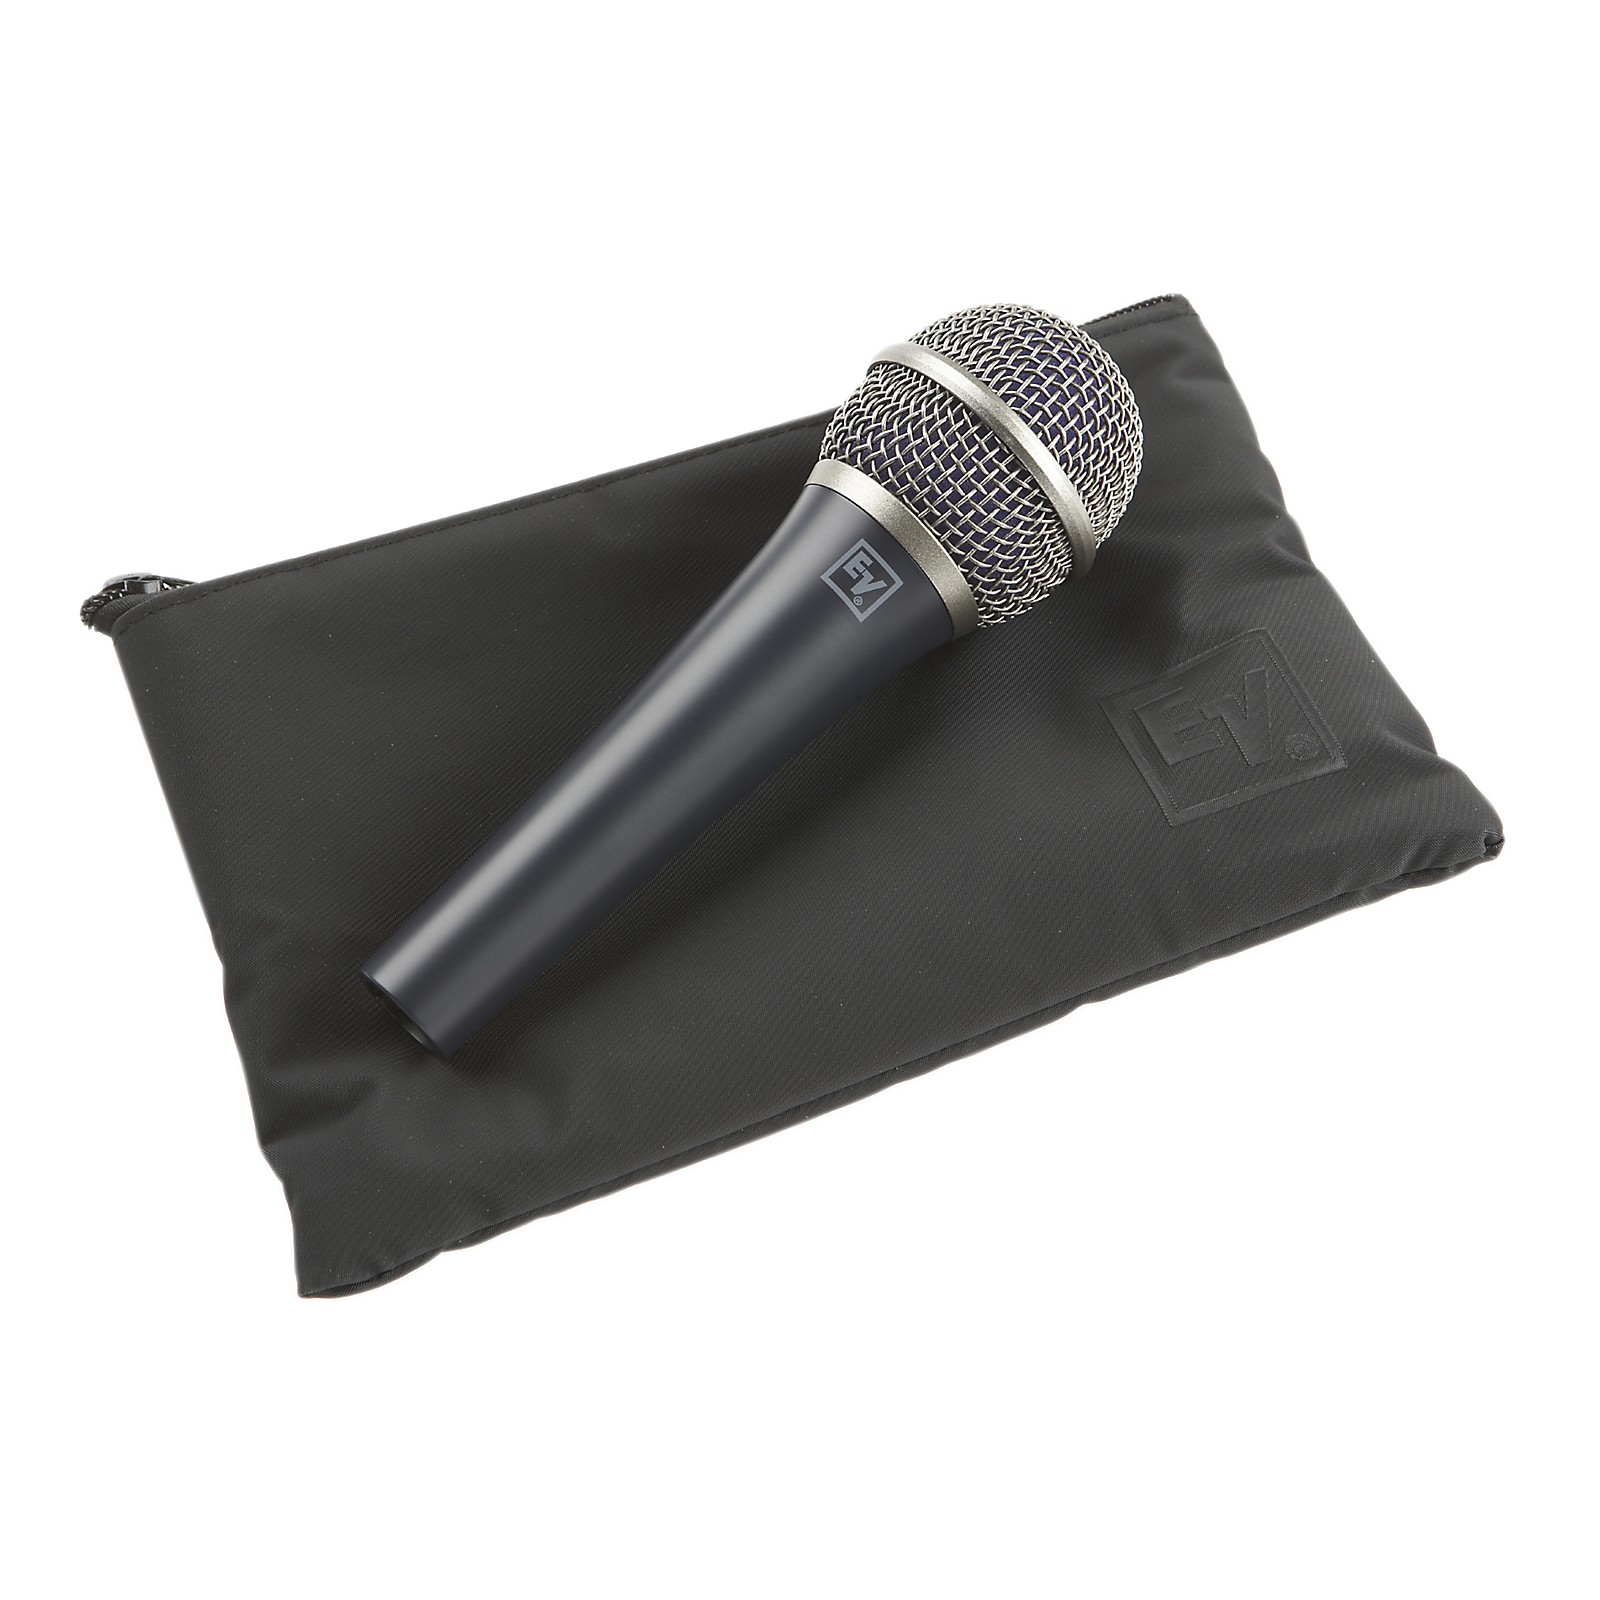 Co9 Premium Vocal Microphone | Center